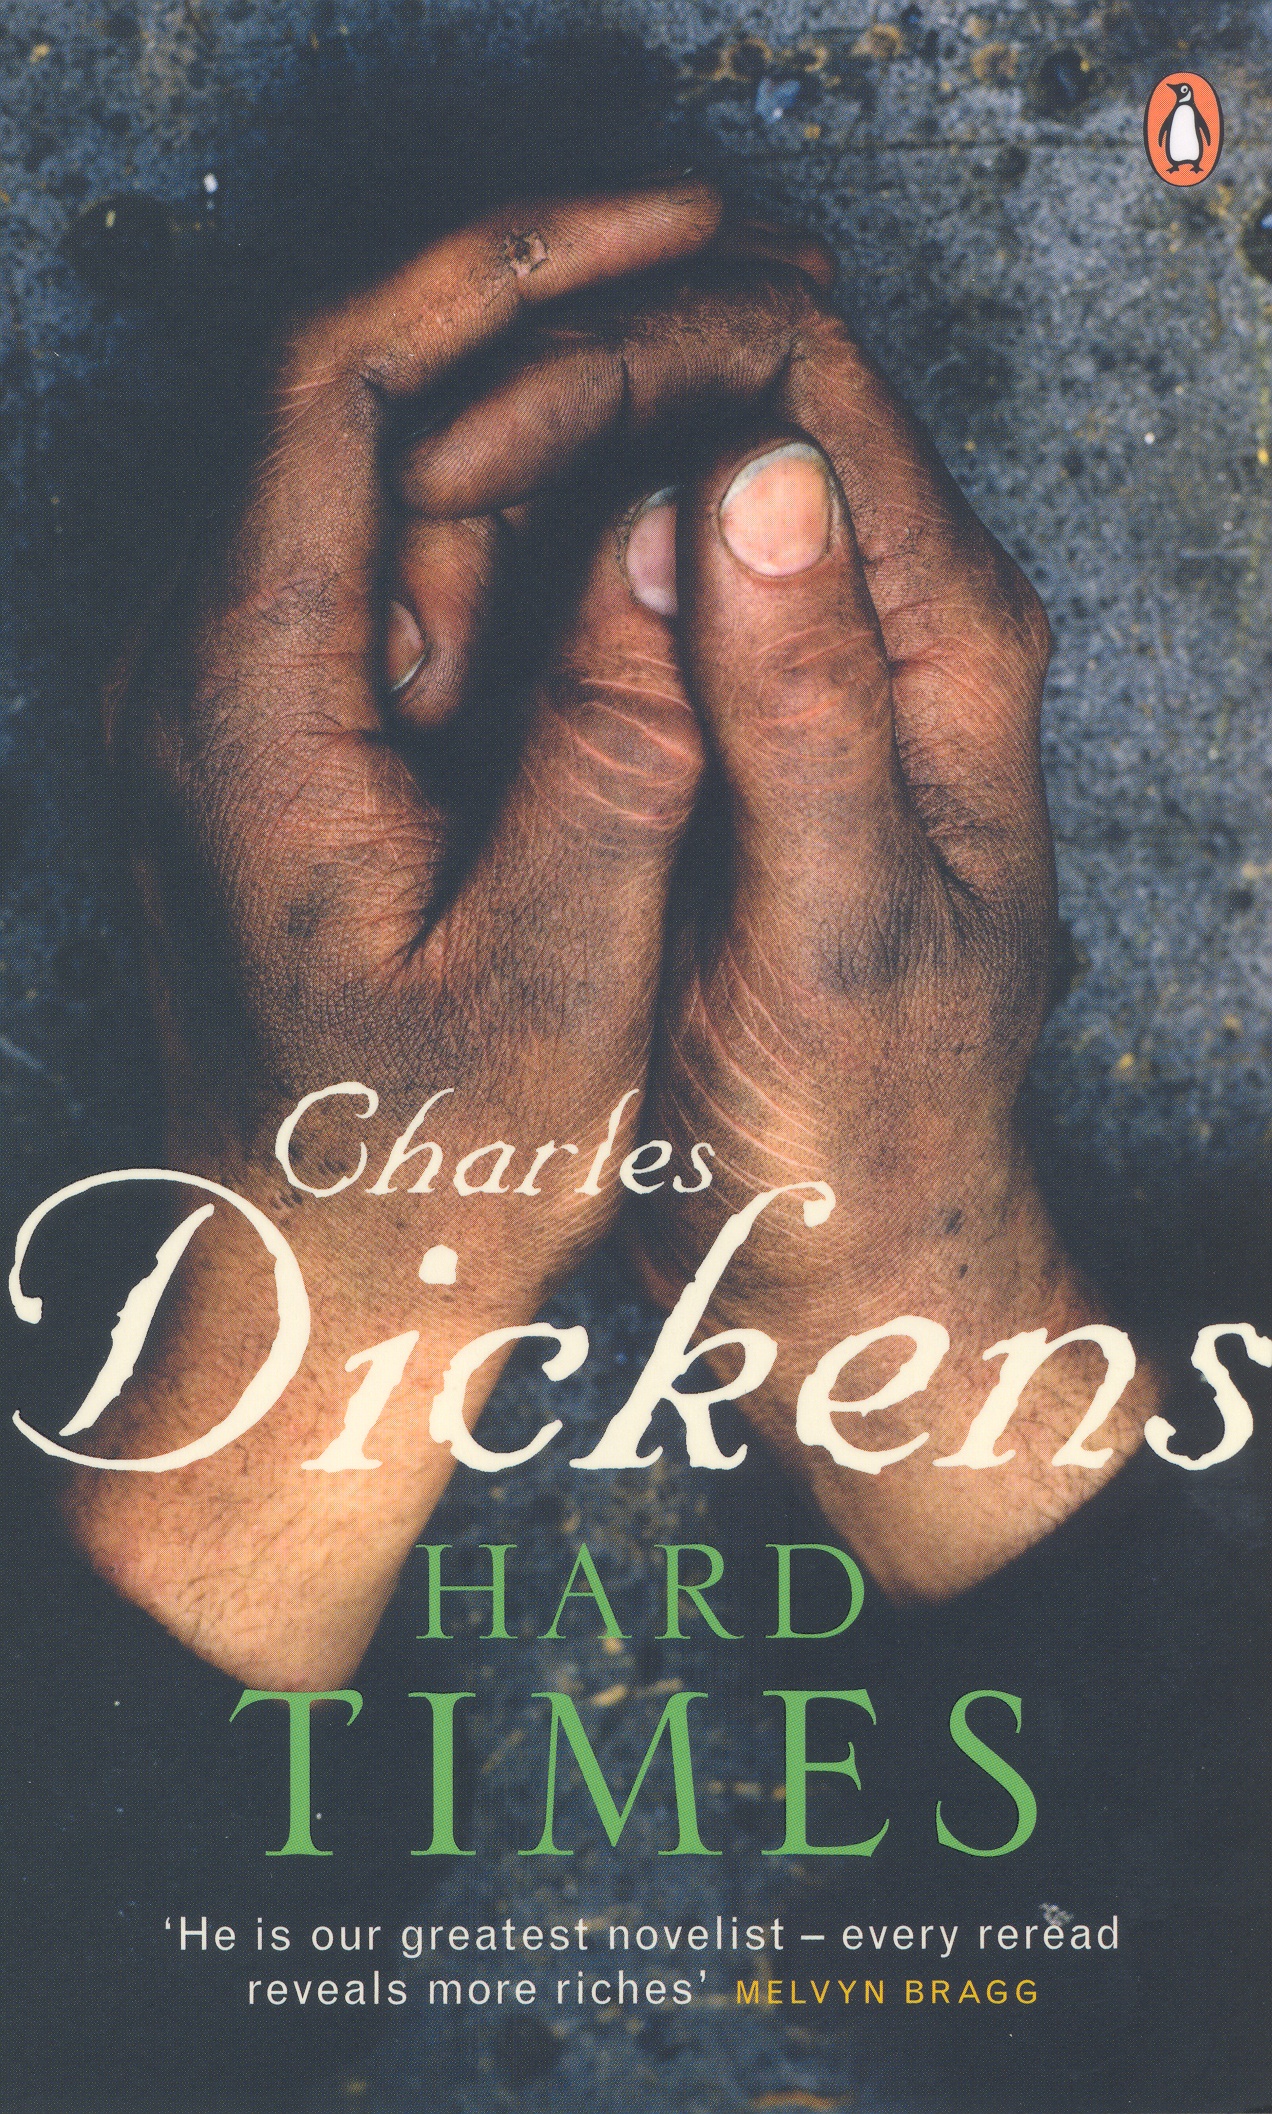 Hard times. Hard times book. Iris Murdoch the Severed head. Dickens hard times Harry French. Тяжелые времена книга